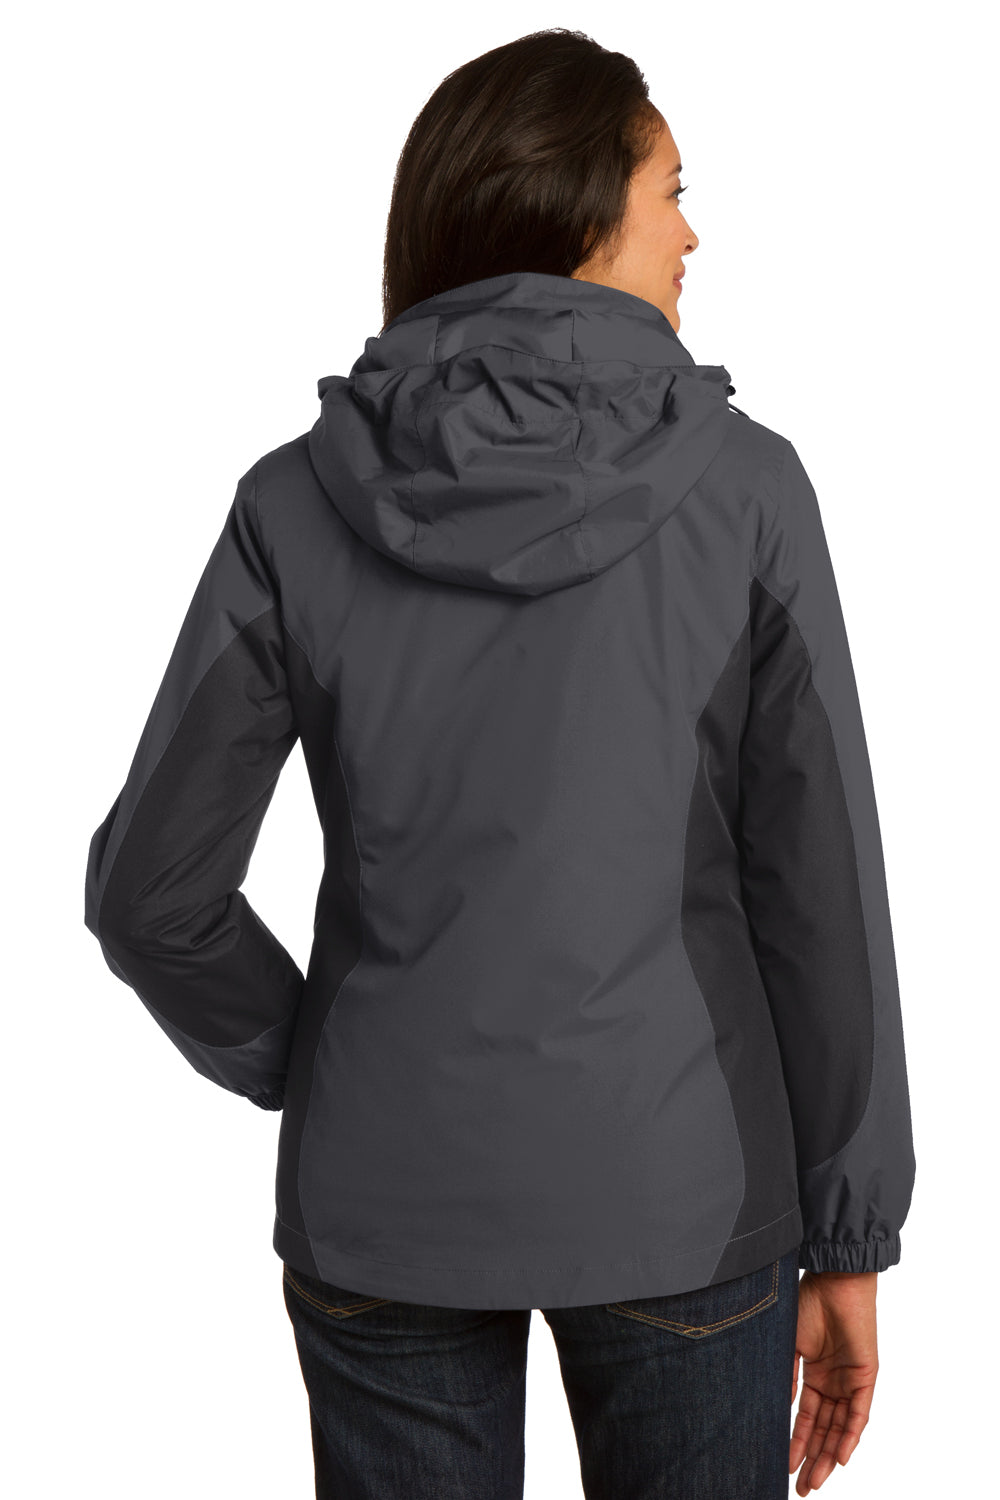 Port Authority L321 Womens 3-in-1 Wind & Water Resistant Full Zip Hooded Jacket Grey/Black/Berry Purple Back